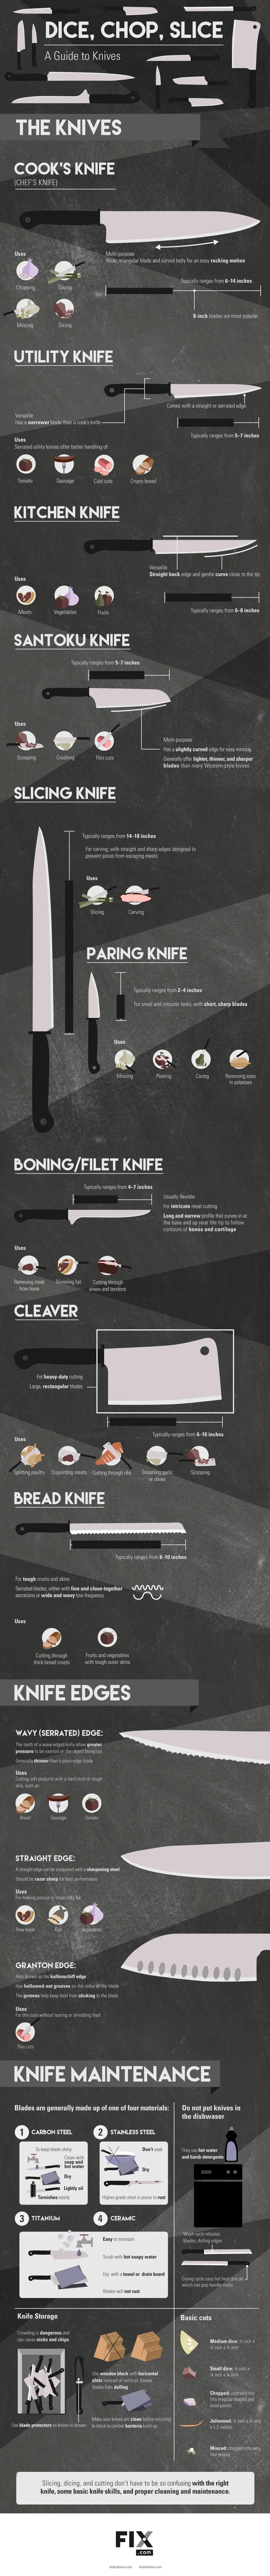 Ultimate Kitchen Knife Guide - Which Kitchen Knife Should I Use - www.platingpixels.com